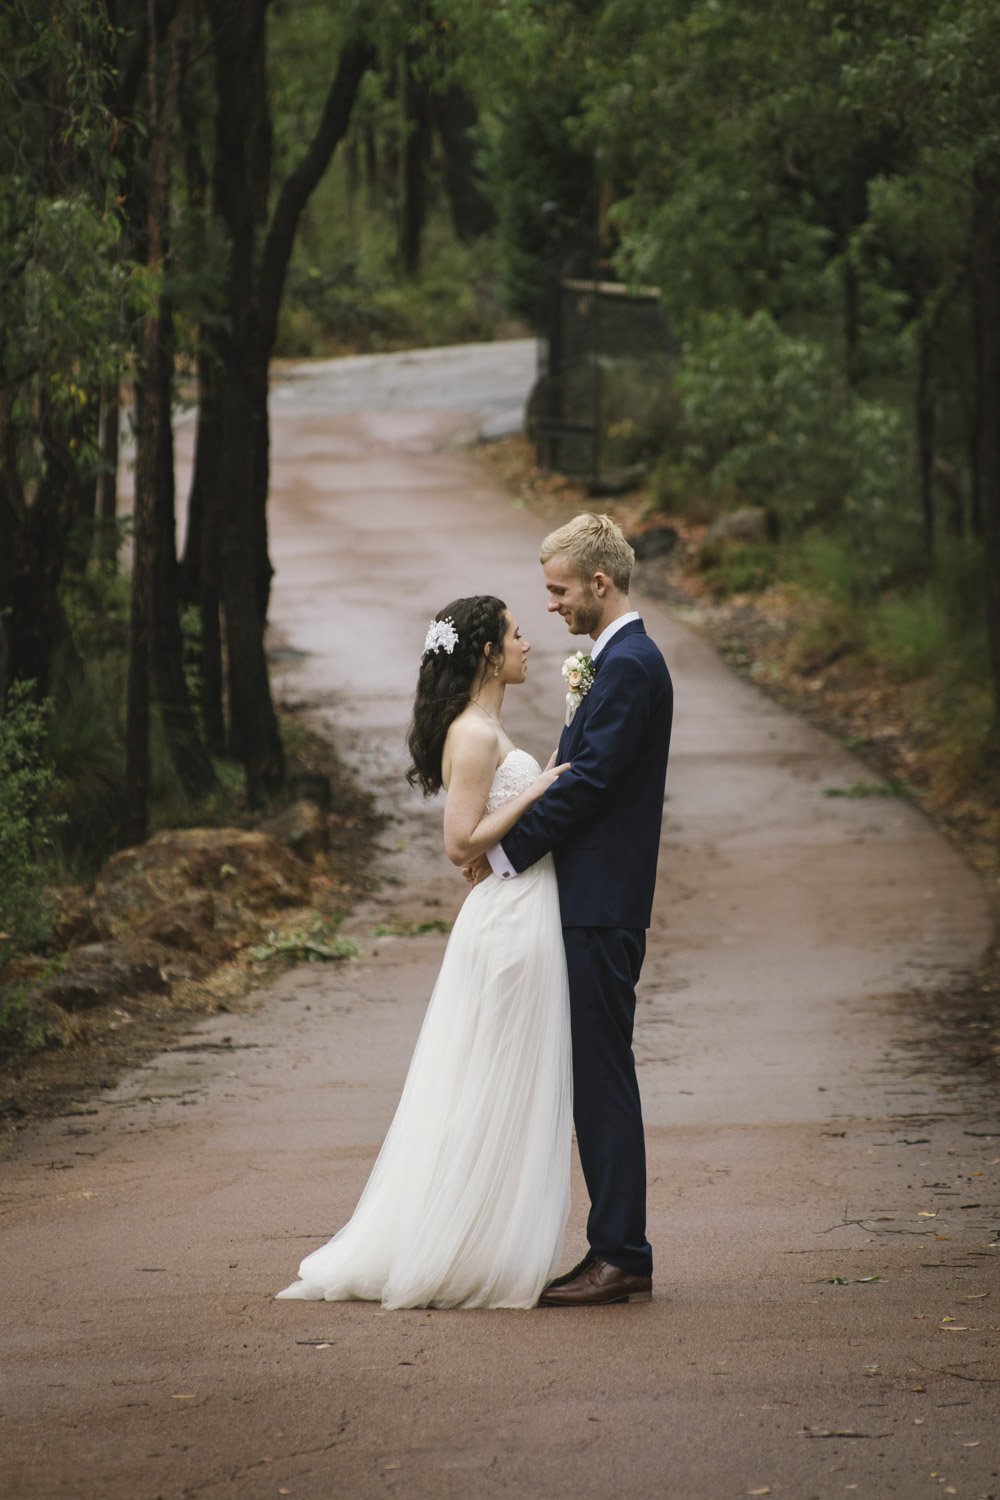 Darlington-Estate-Perth-Wedding-Photographer-Angie-Roe-Photography-56.jpg